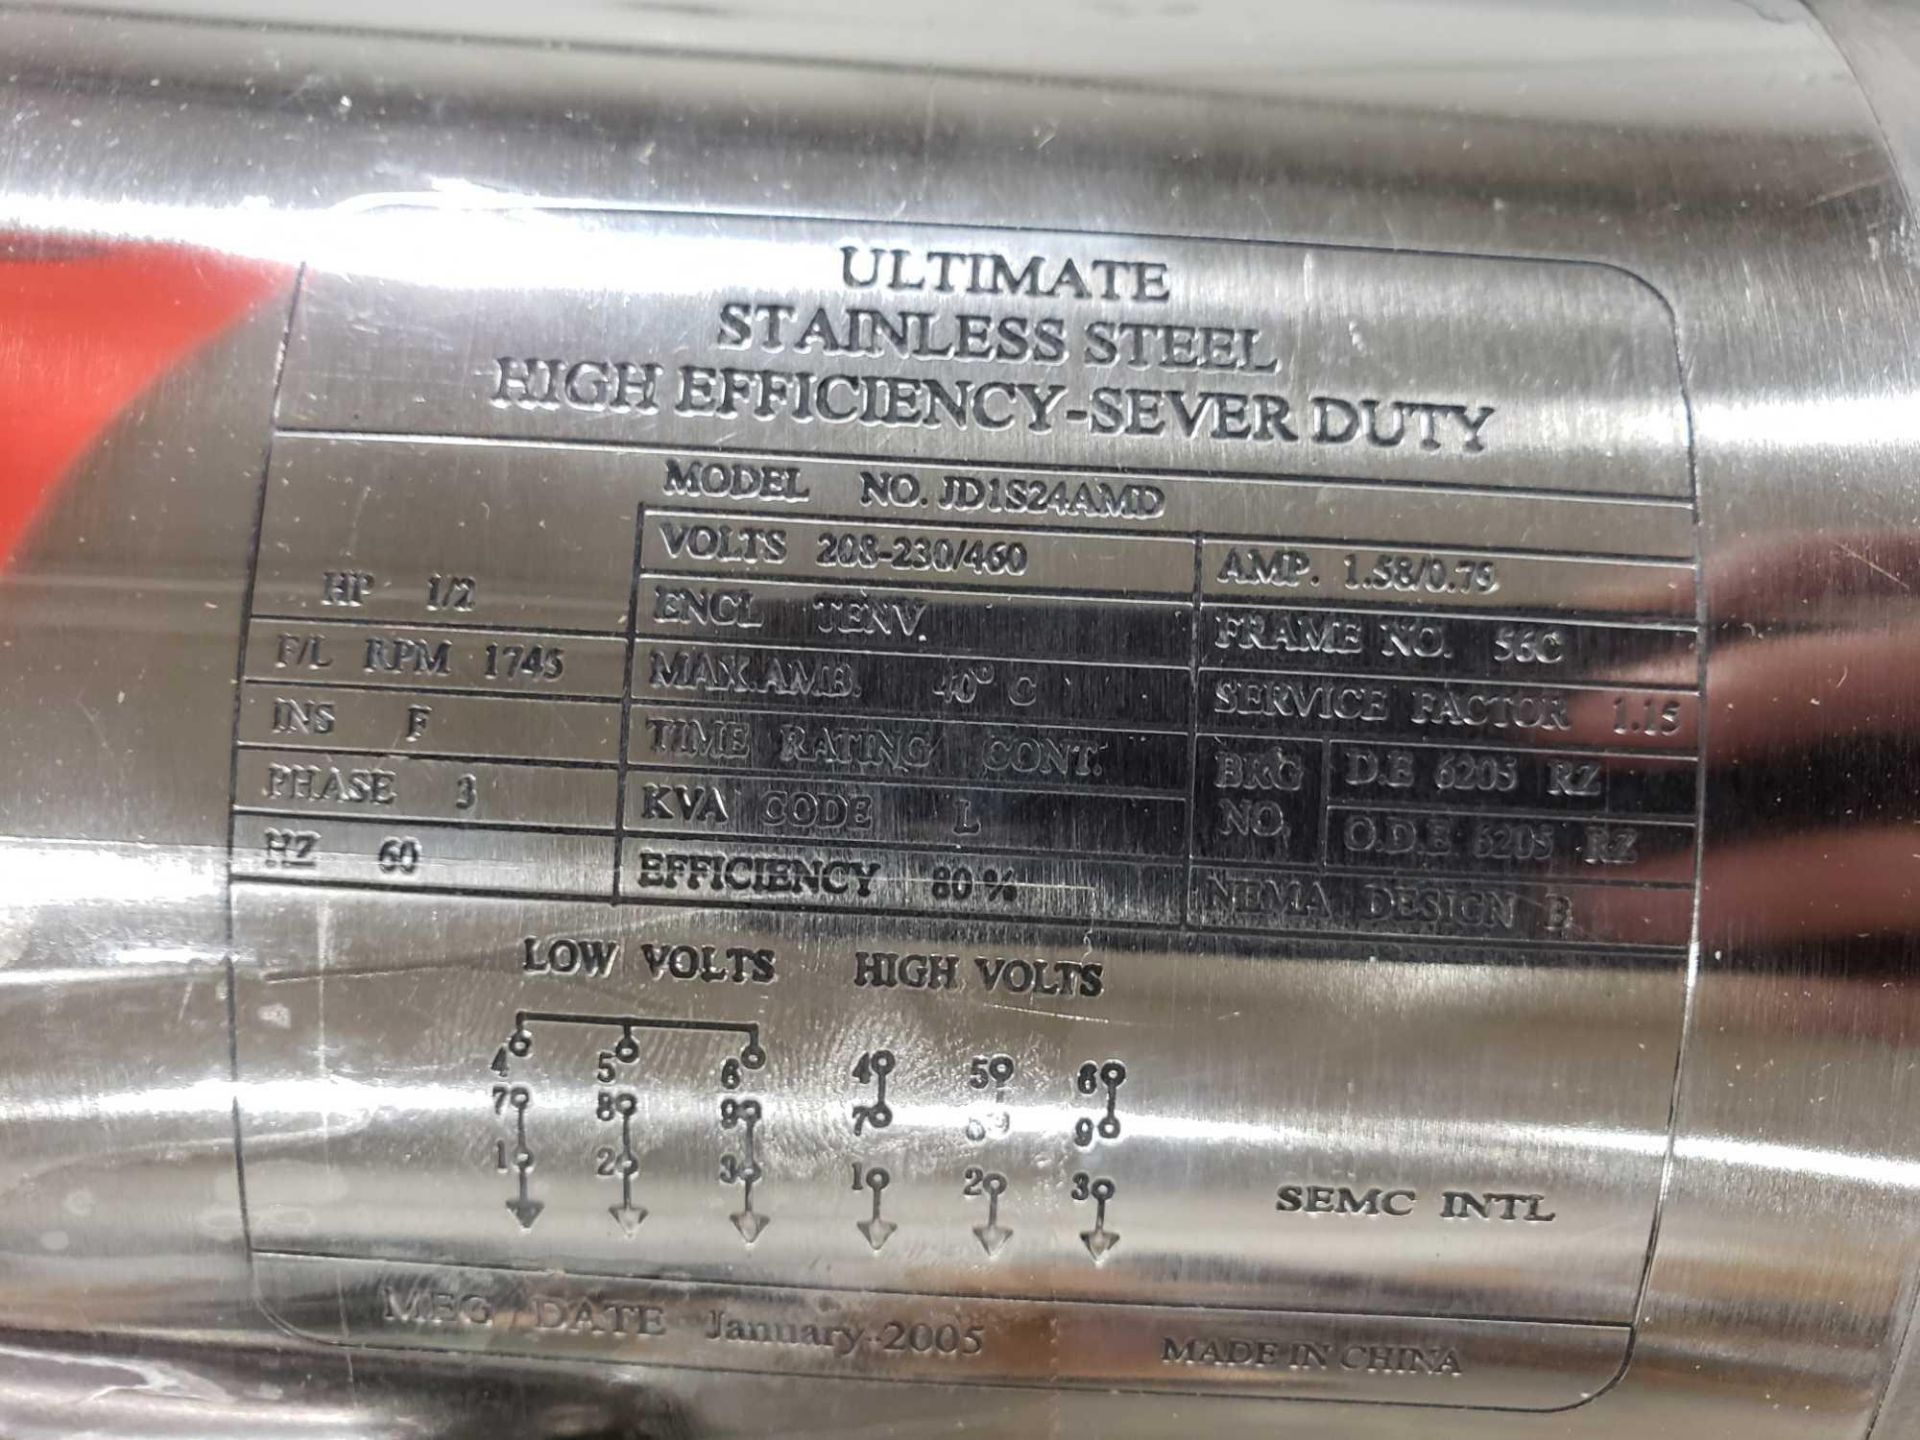 Ultimate Stainless Steel High Efficiency Severe Duty motor model JD1S24AMD, 1/2hp, 3 phase 208/460v. - Image 2 of 3